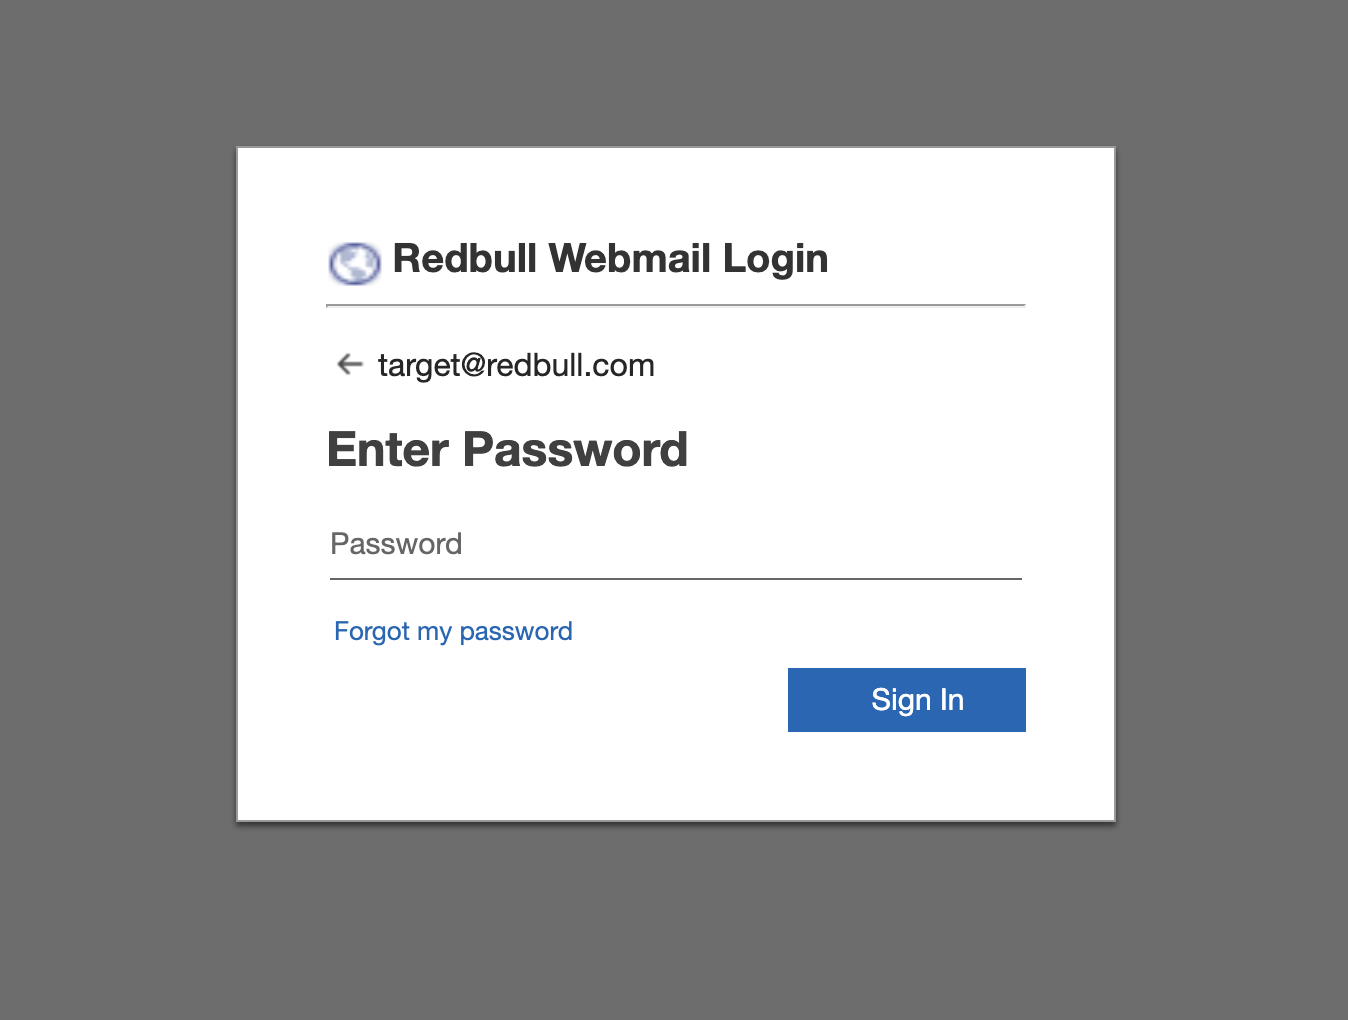 Redbull Webmail Login